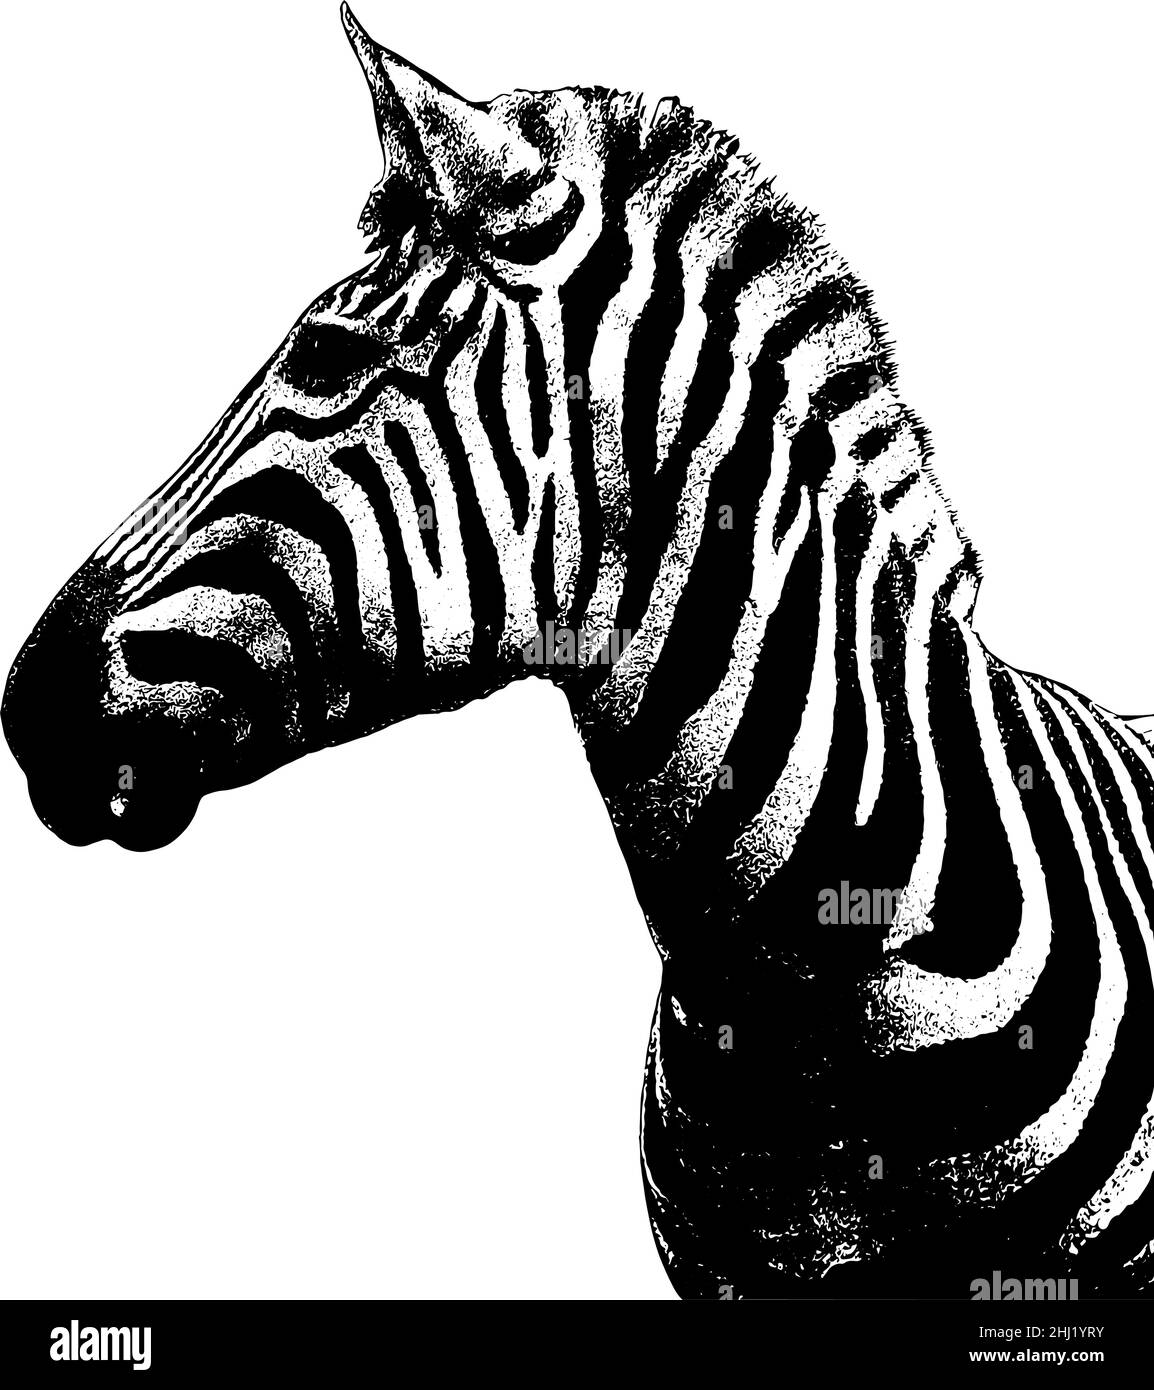 Zebra profile view of head illustration in black on white background Stock Vector